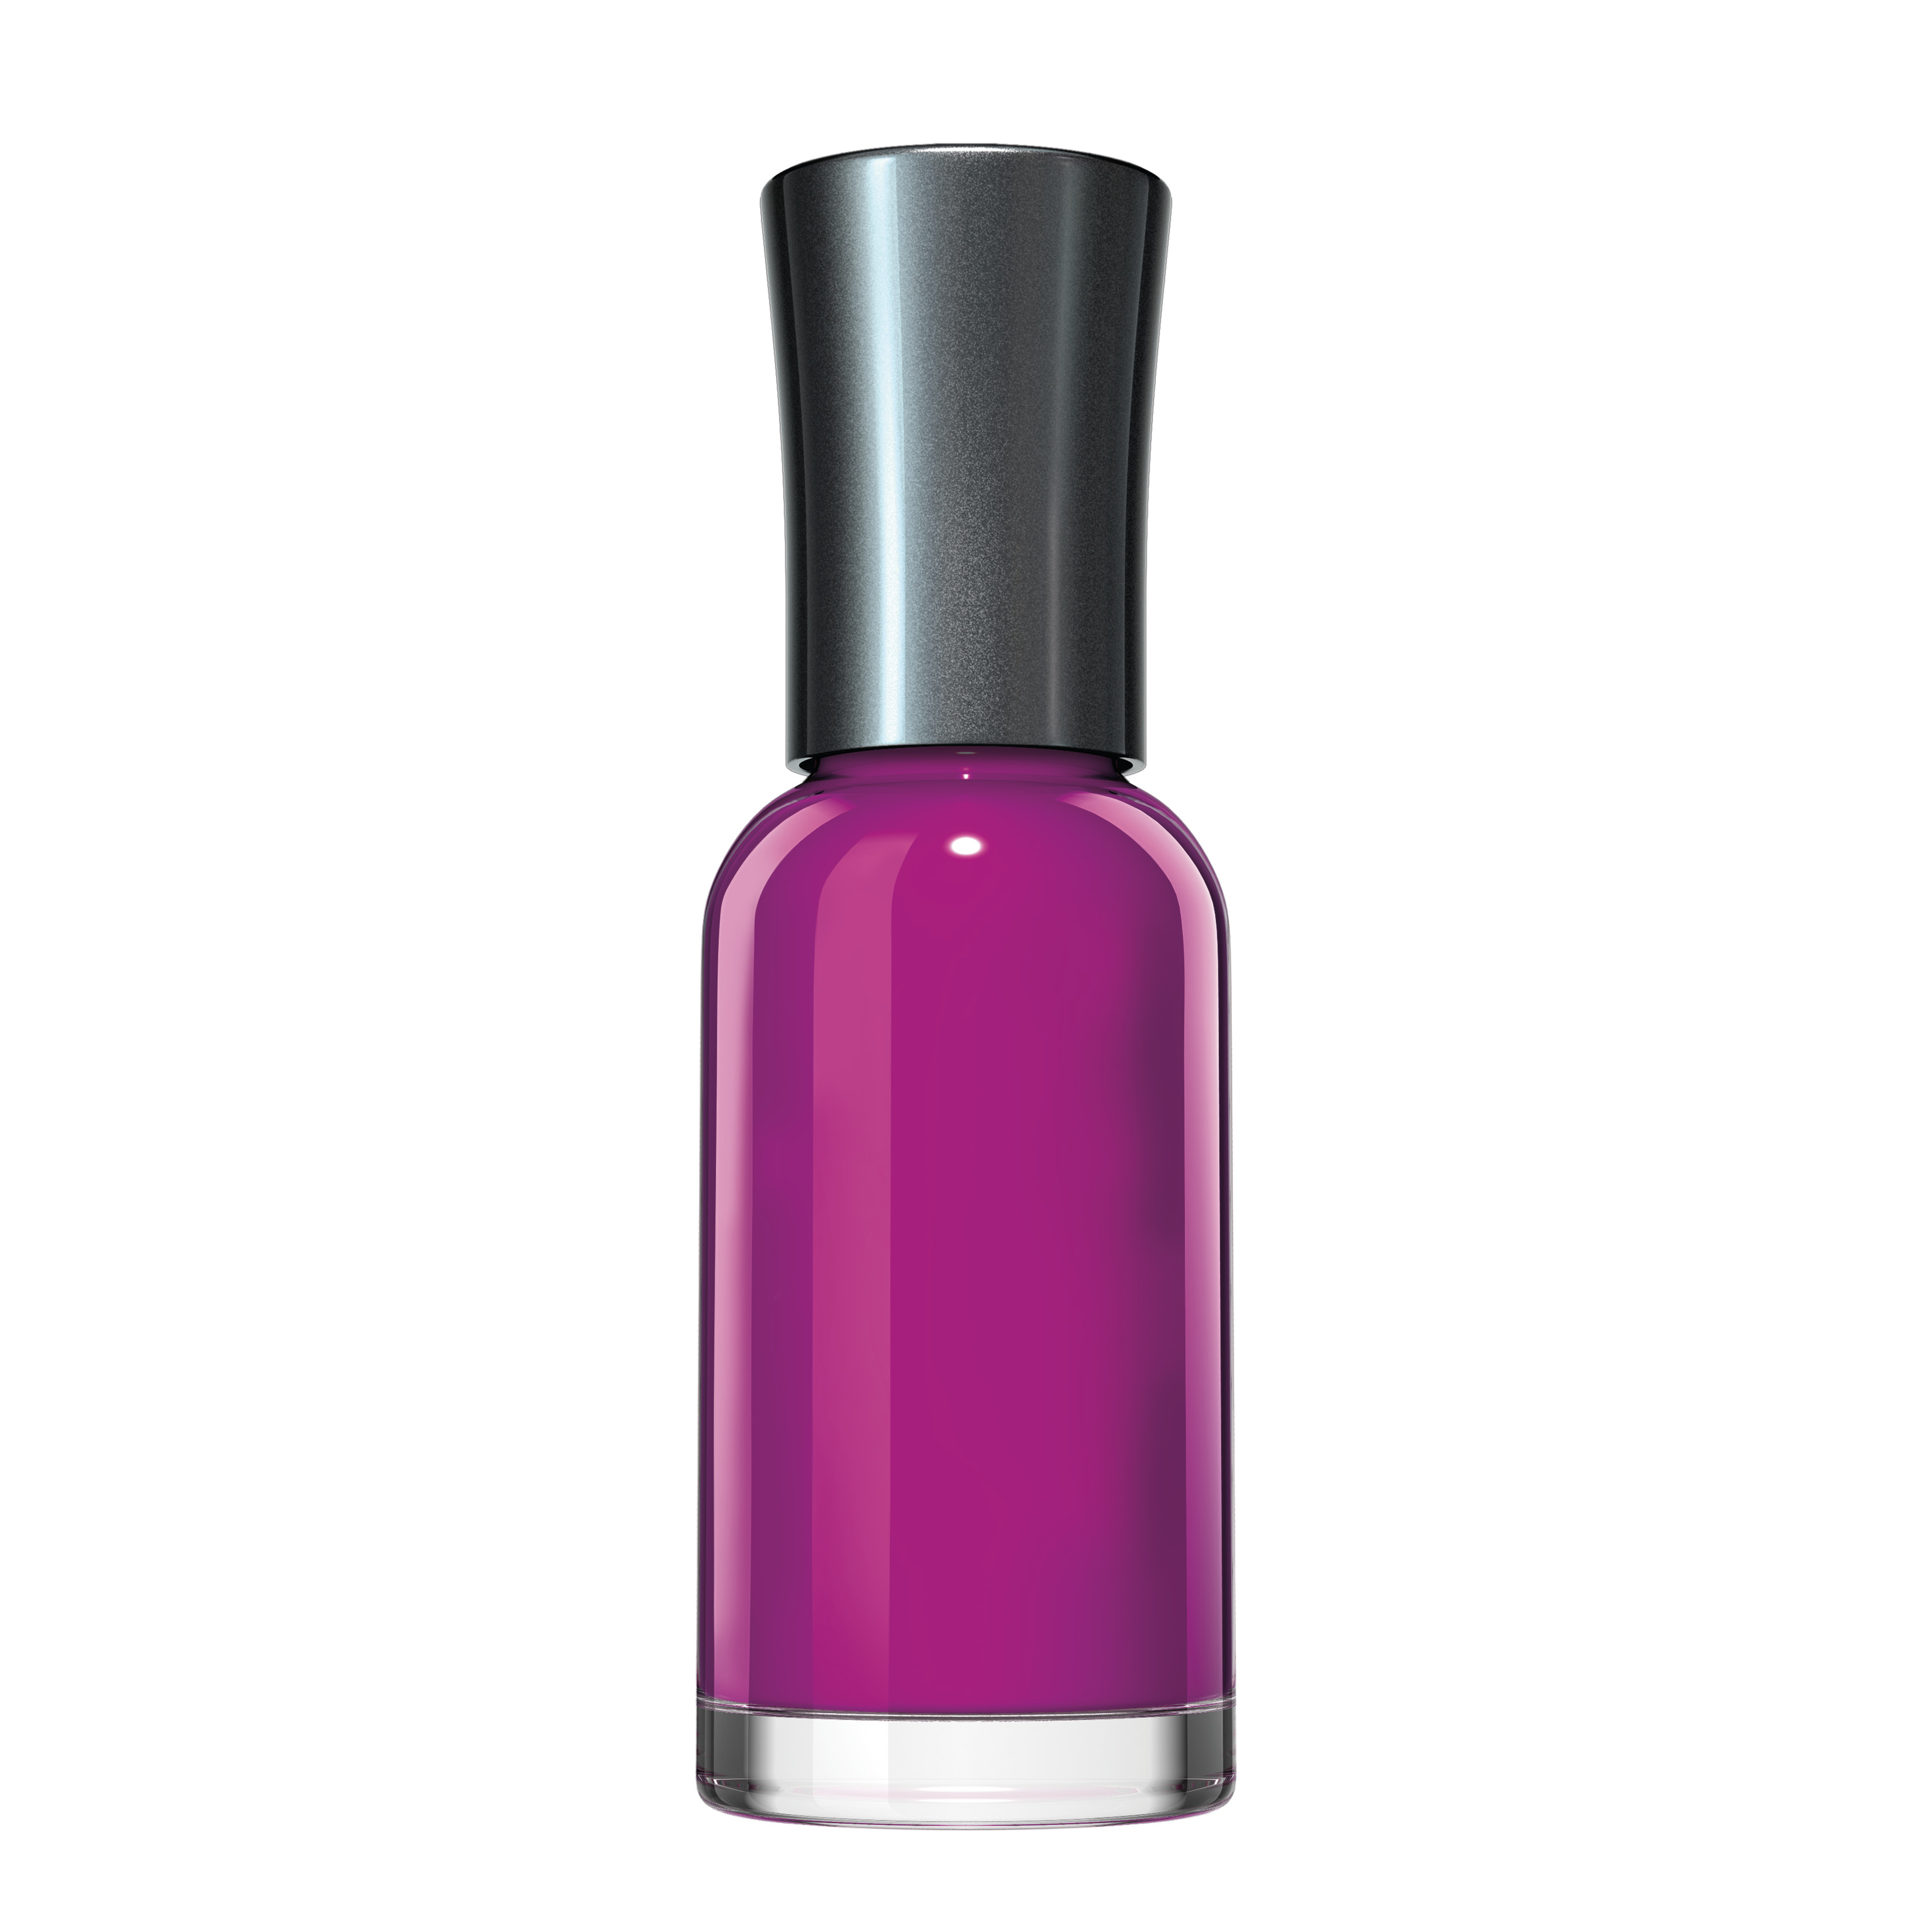 Sally Hansen Xtreme Wear Nail Polish, Pep-Plum, 0.4 oz, Chip Resistant, Bold Color - image 3 of 5